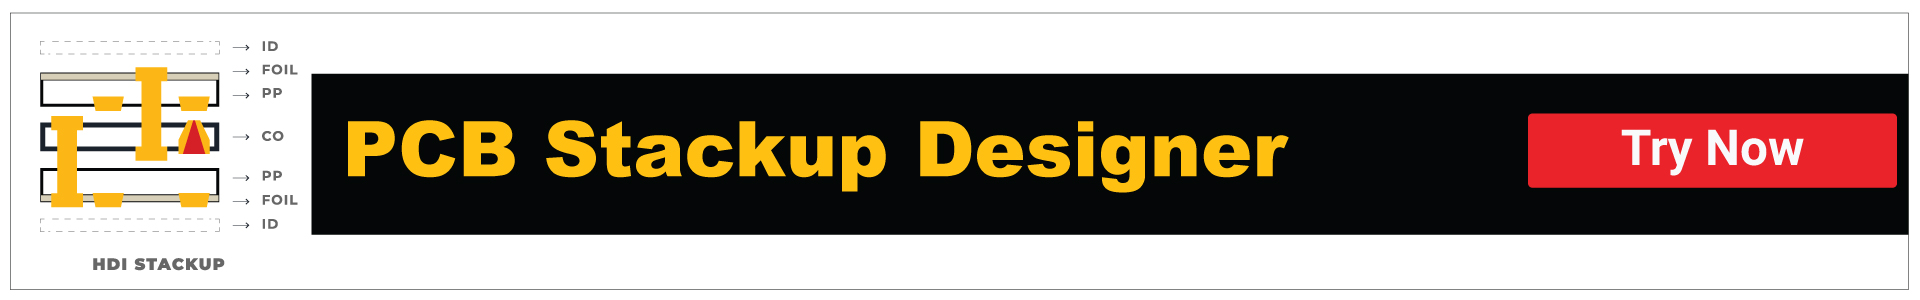 stackup-designer-blog-banner-small